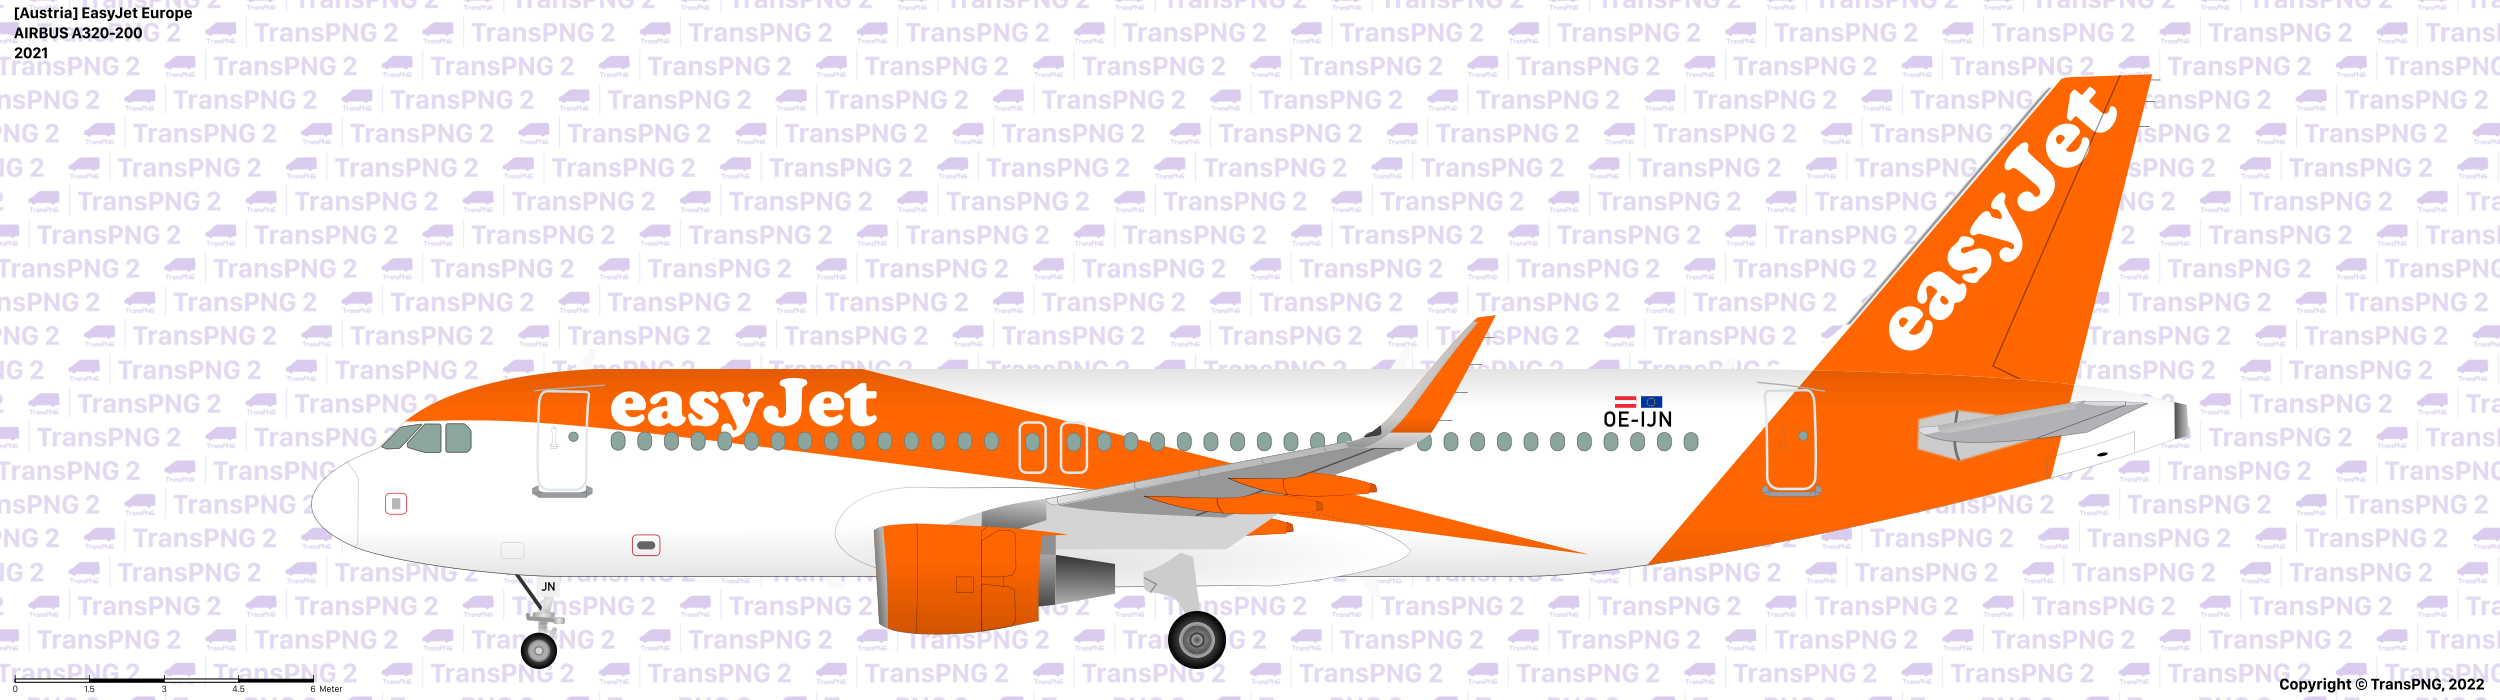 TransPNG.net | 分享世界各地多種交通工具的優秀繪圖 - 飛機 52447435355_a2c564e5d2_o